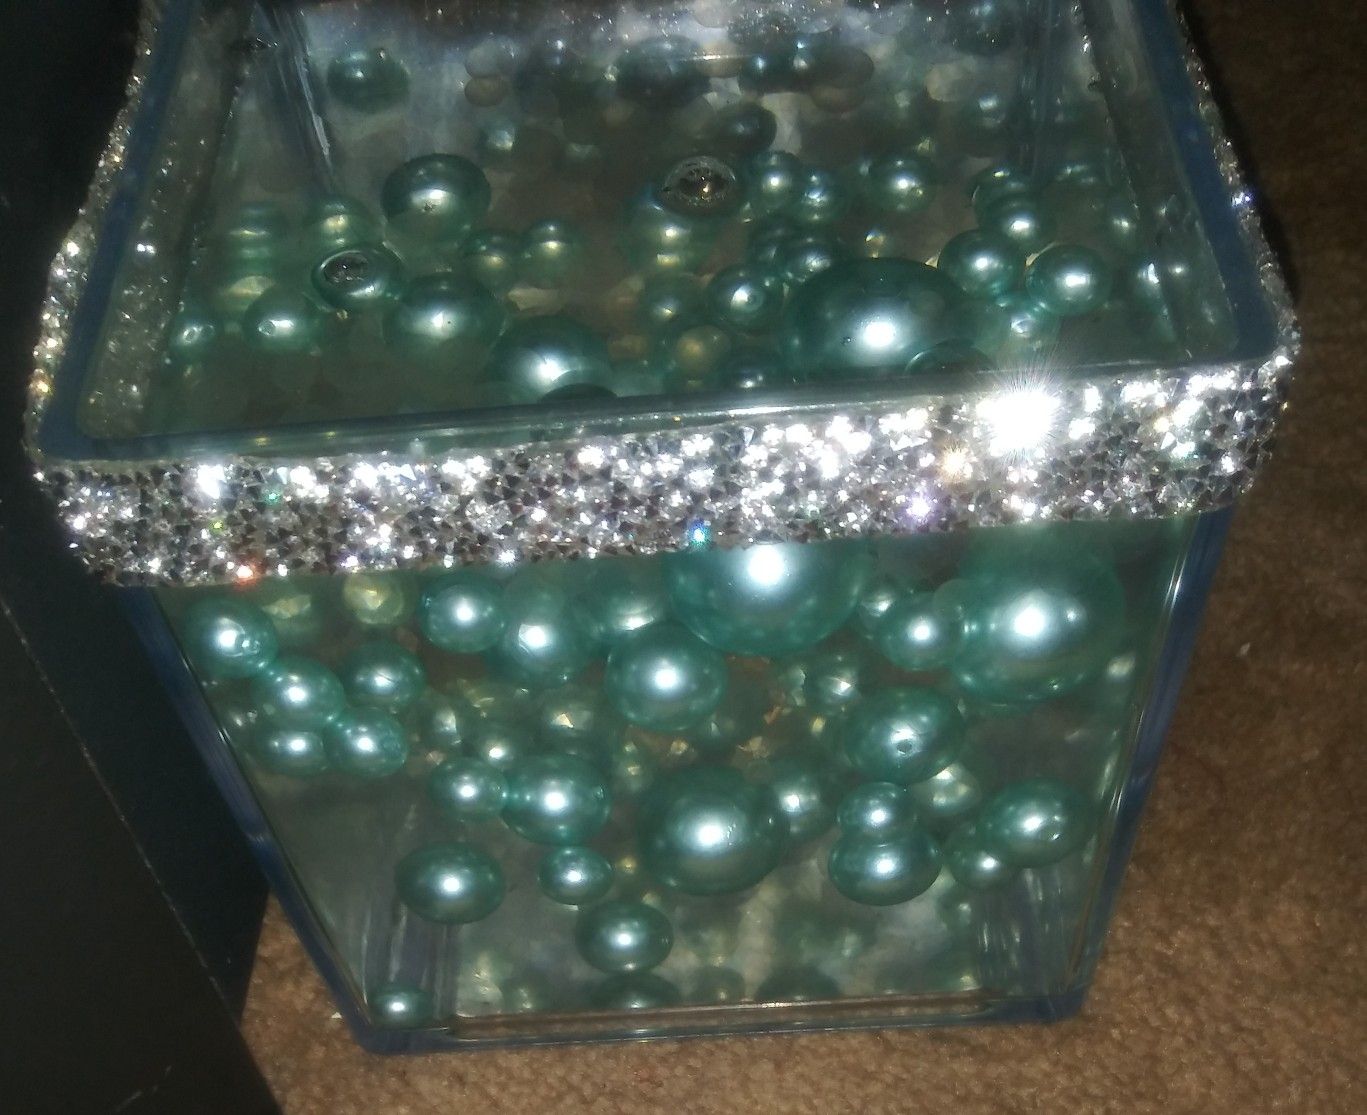 Vase with Beautiful floating balls